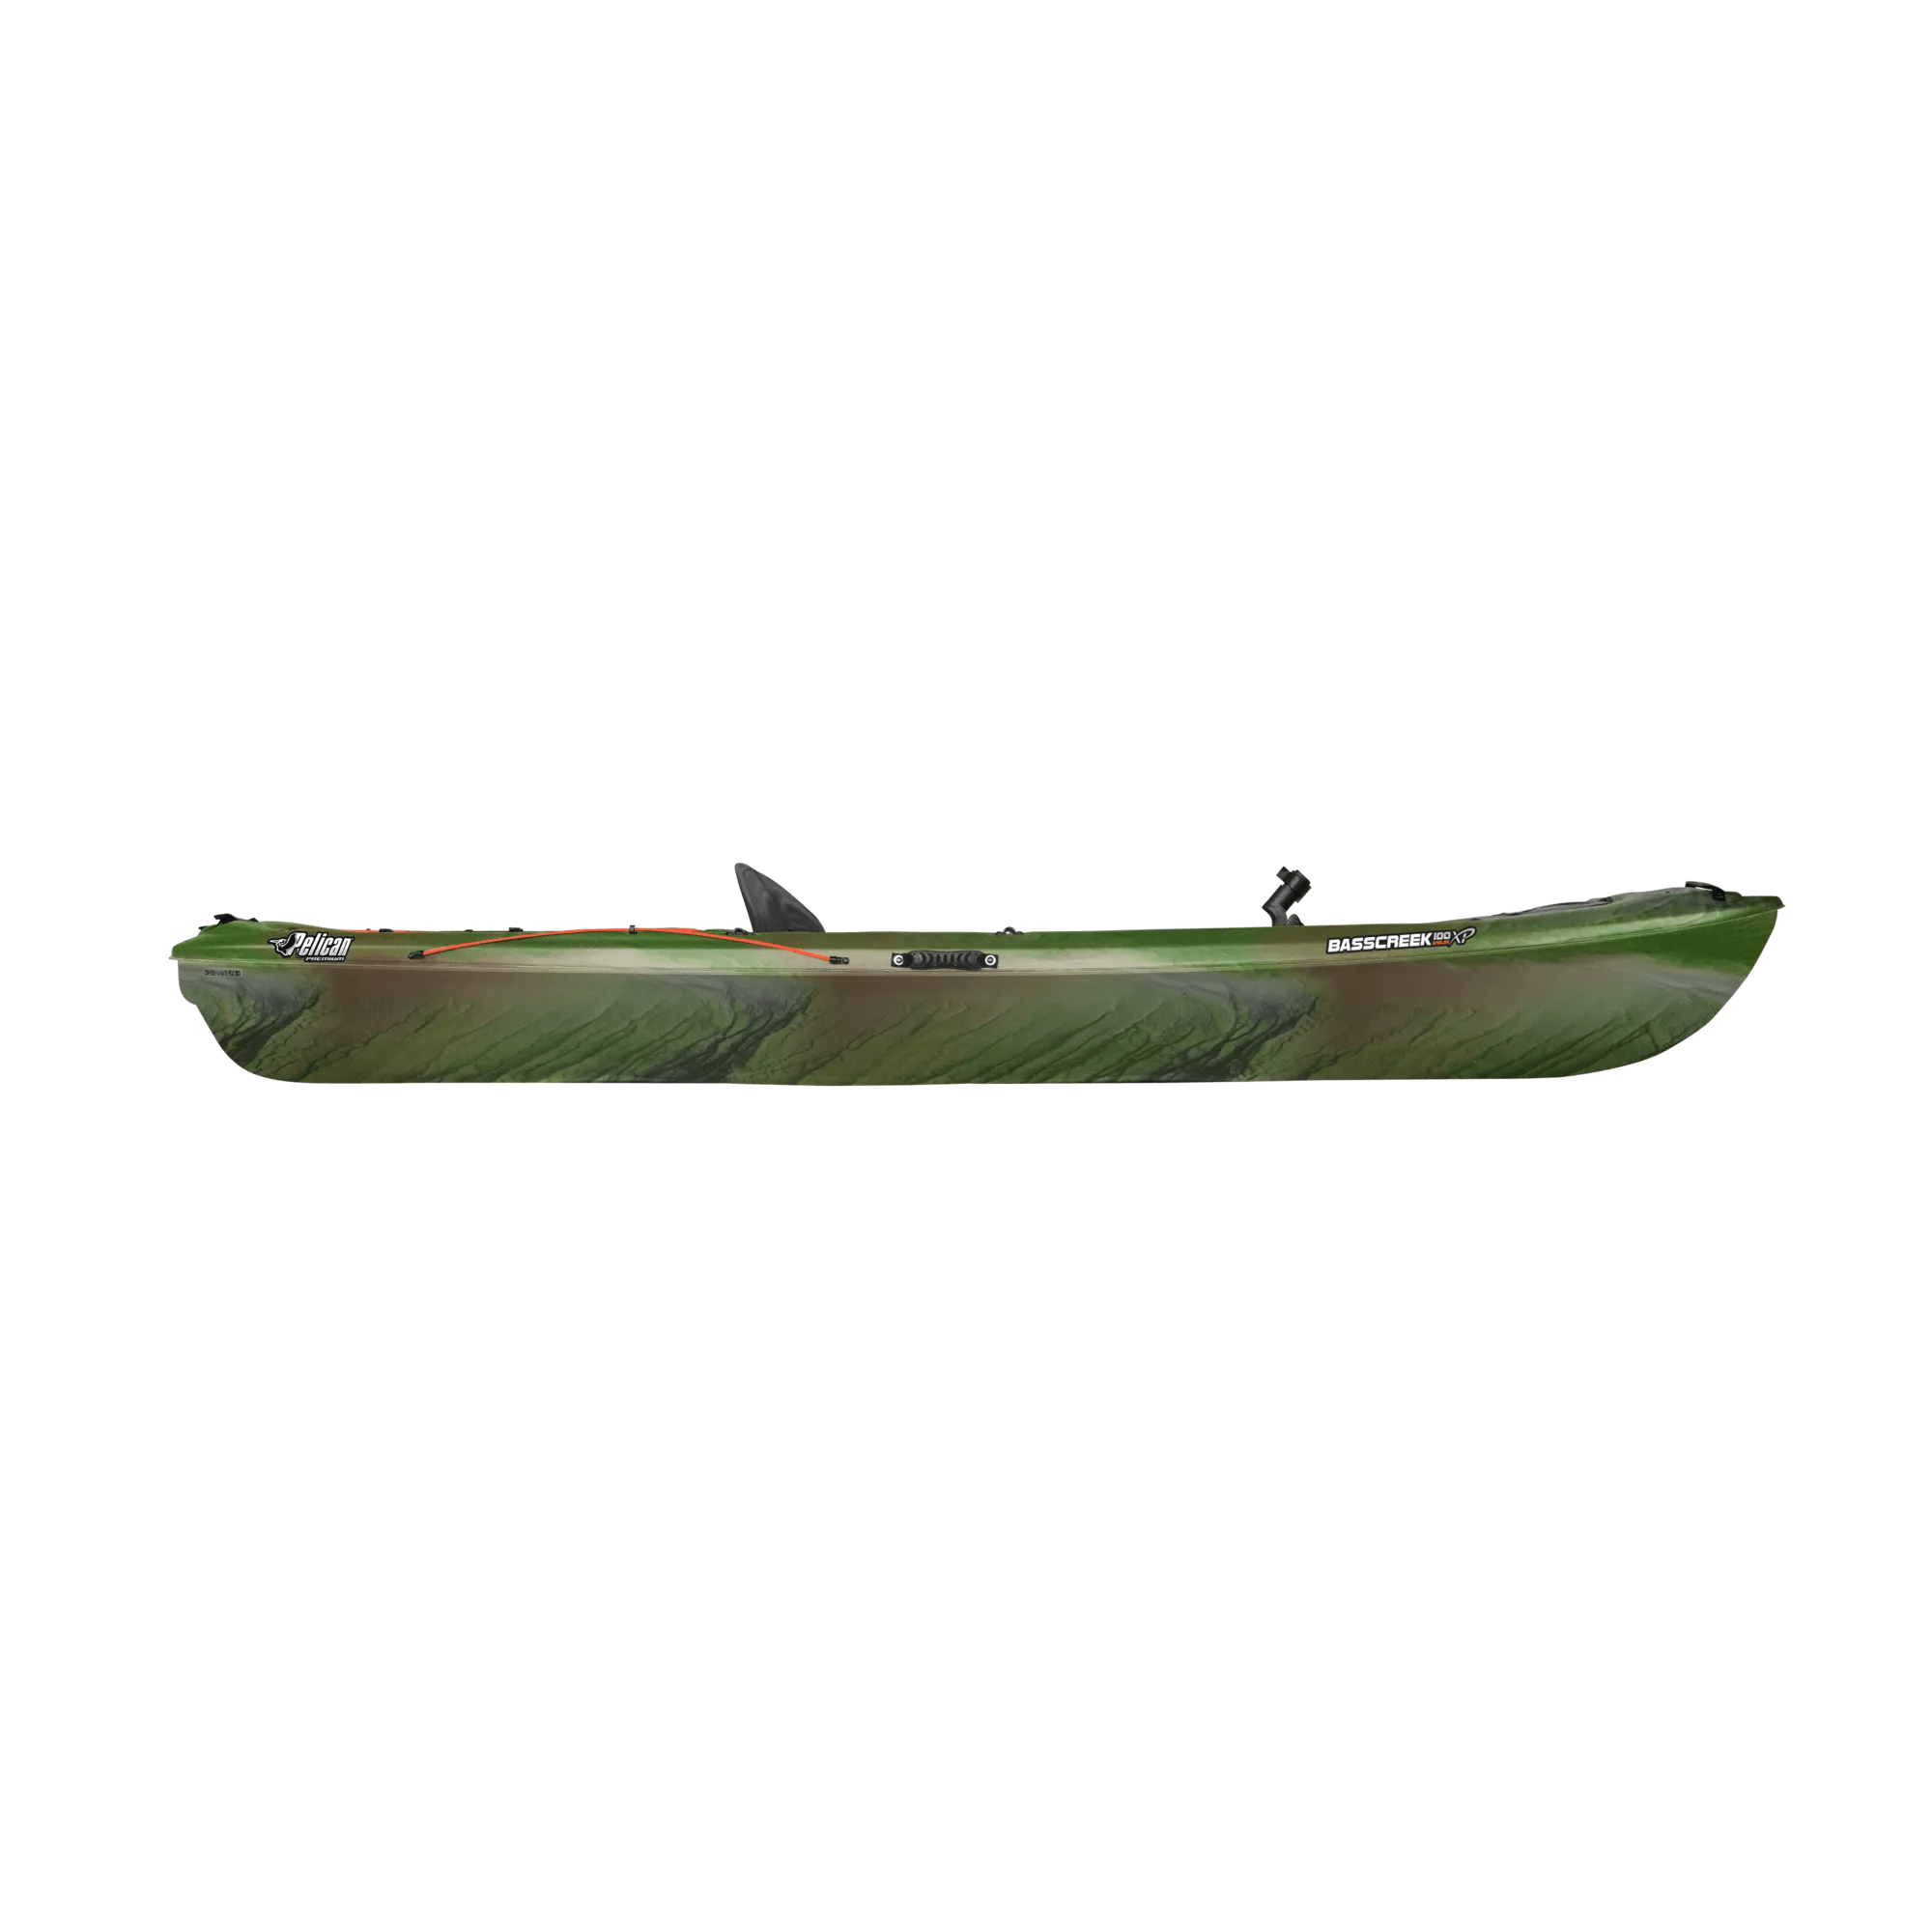 PELICAN - Basscreek 100XP Angler Fishing Kayak - Olive - KWP10P100-00 - SIDE